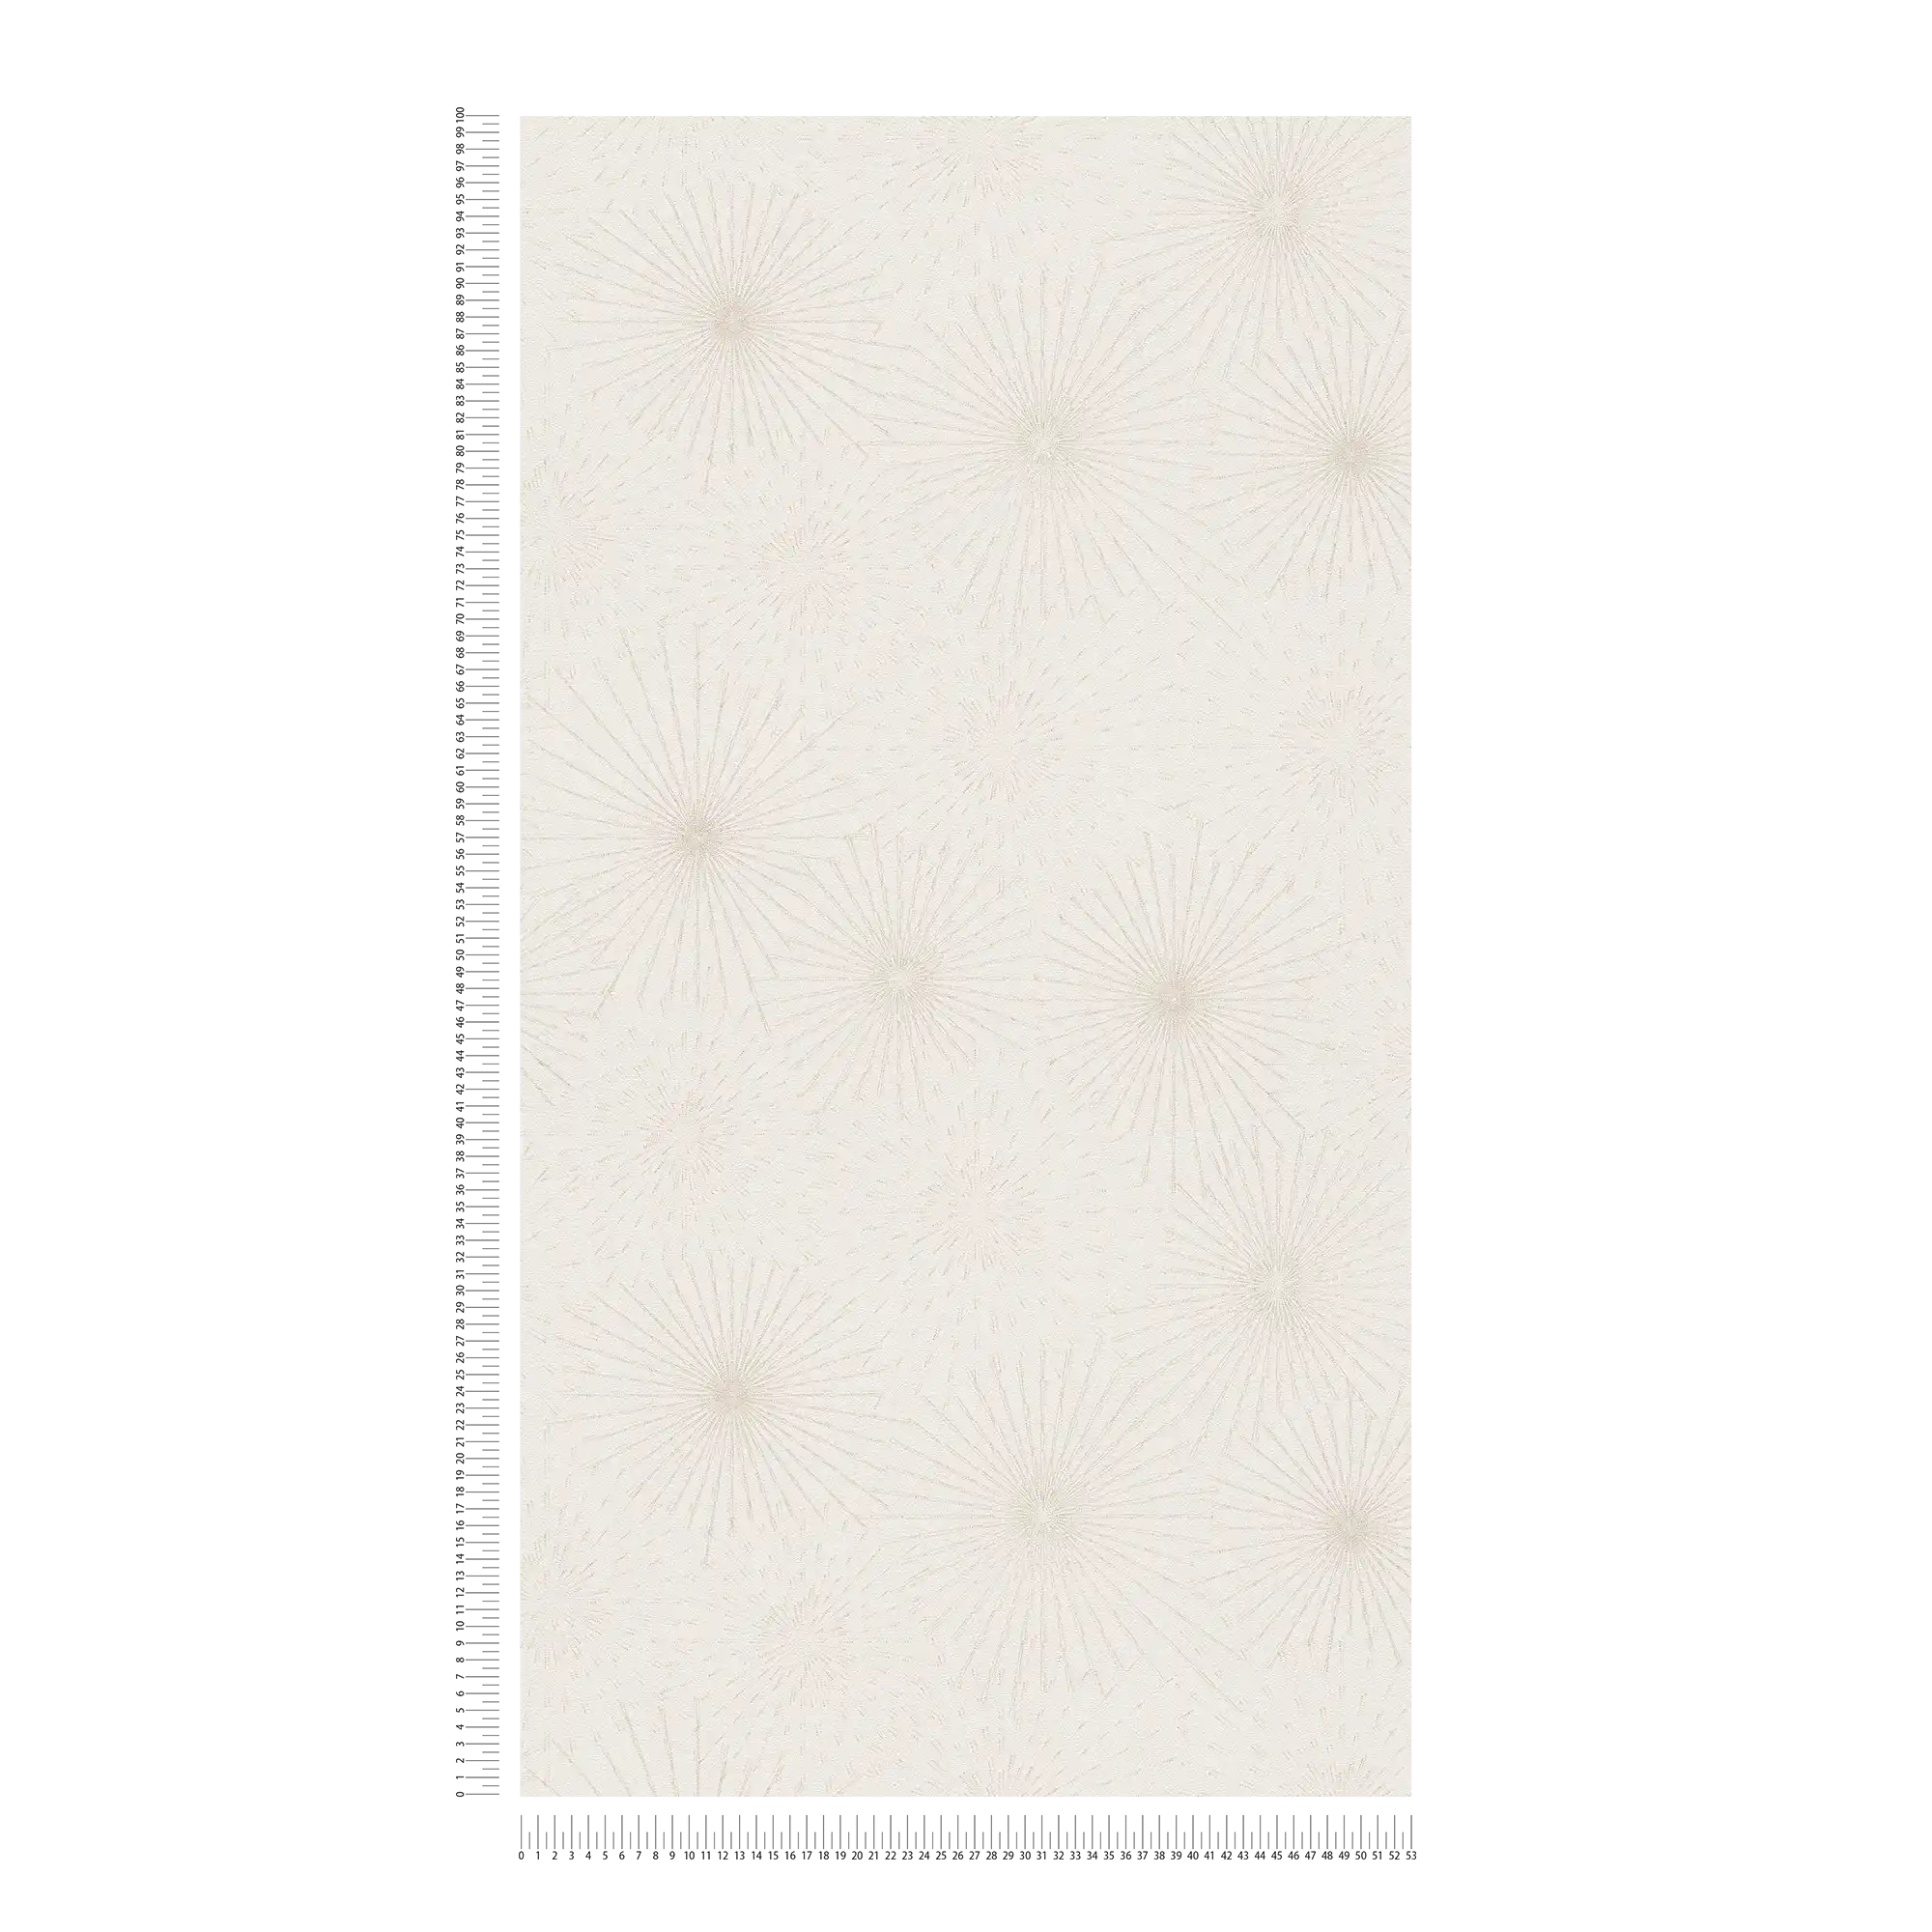             Papel pintado blanco con motivo metálico retro Starburst - blanco
        